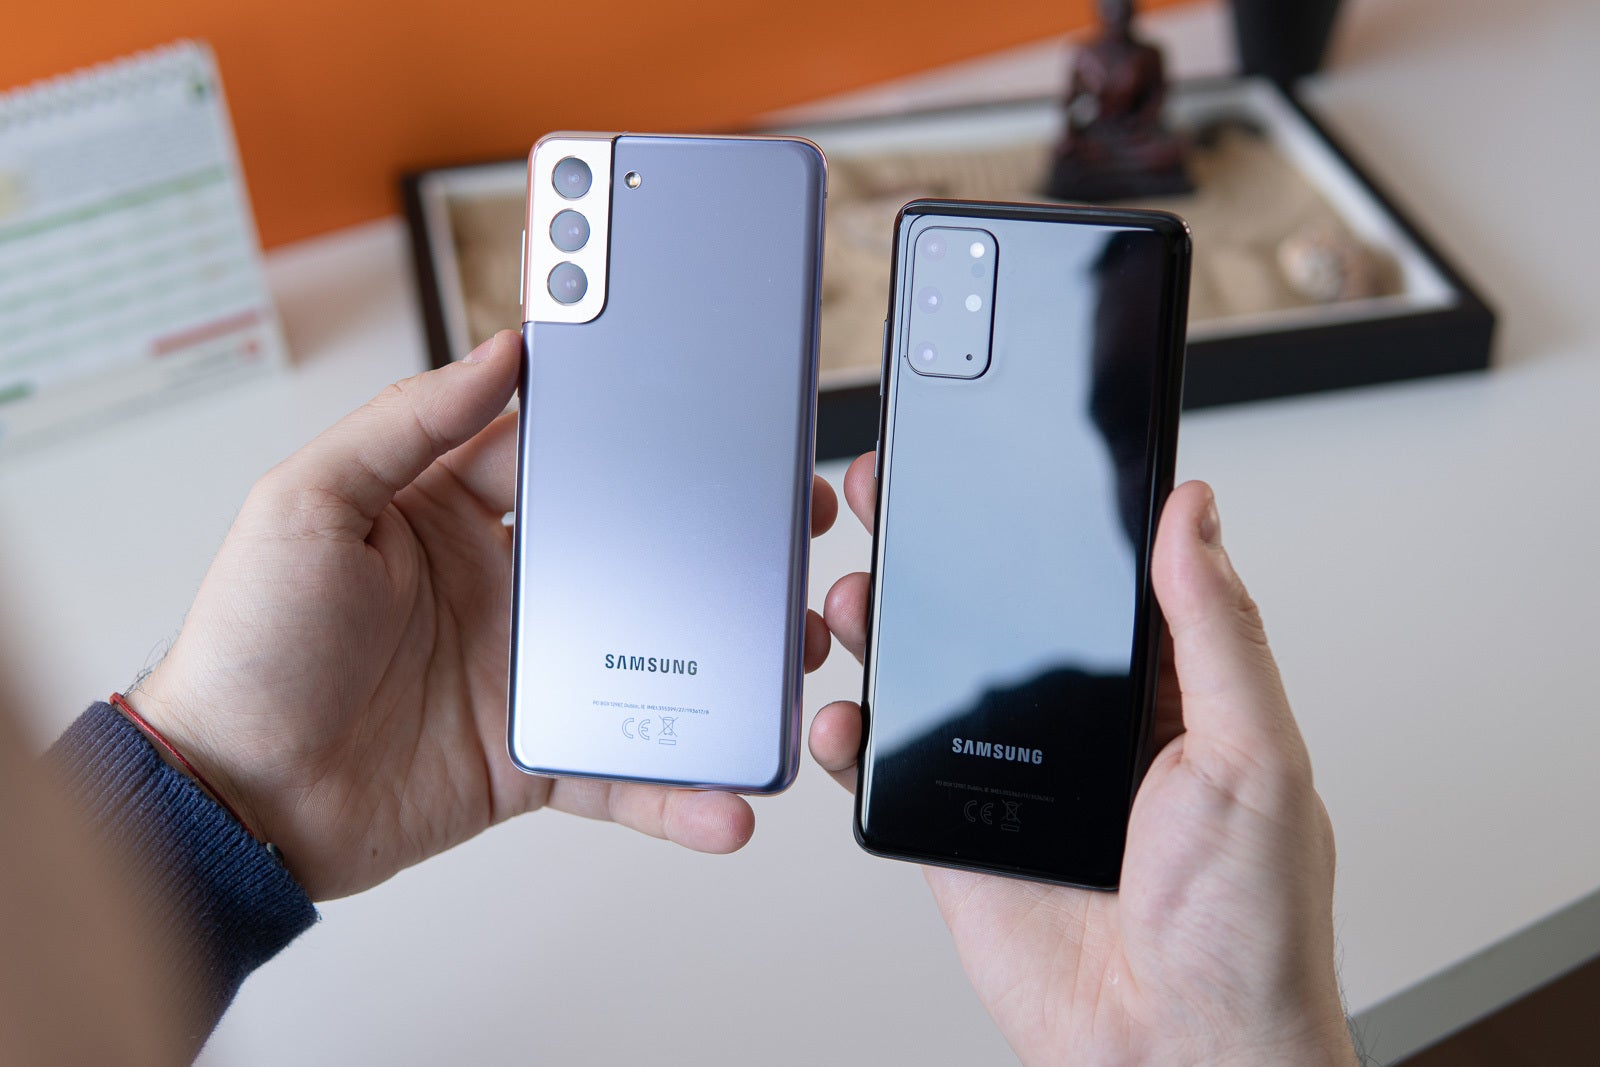 Galaxy S21+ left, Galaxy S20+ right - Samsung Galaxy S21 Plus vs Galaxy S20 Plus